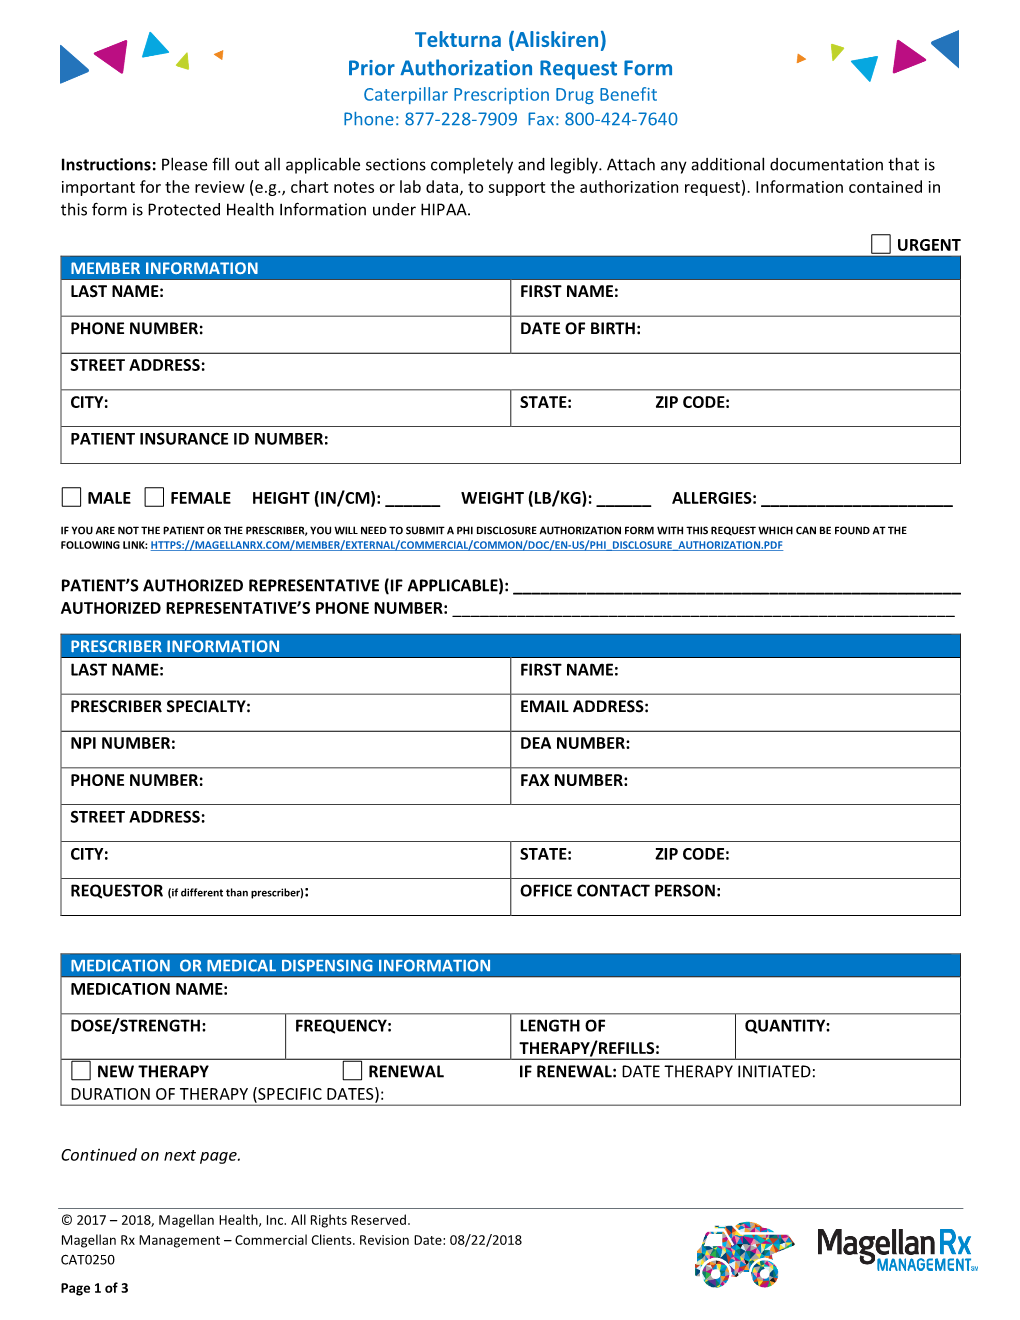 Tekturna (Aliskiren) Prior Authorization Request Form Caterpillar Prescription Drug Benefit Phone: 877-228-7909 Fax: 800-424-7640